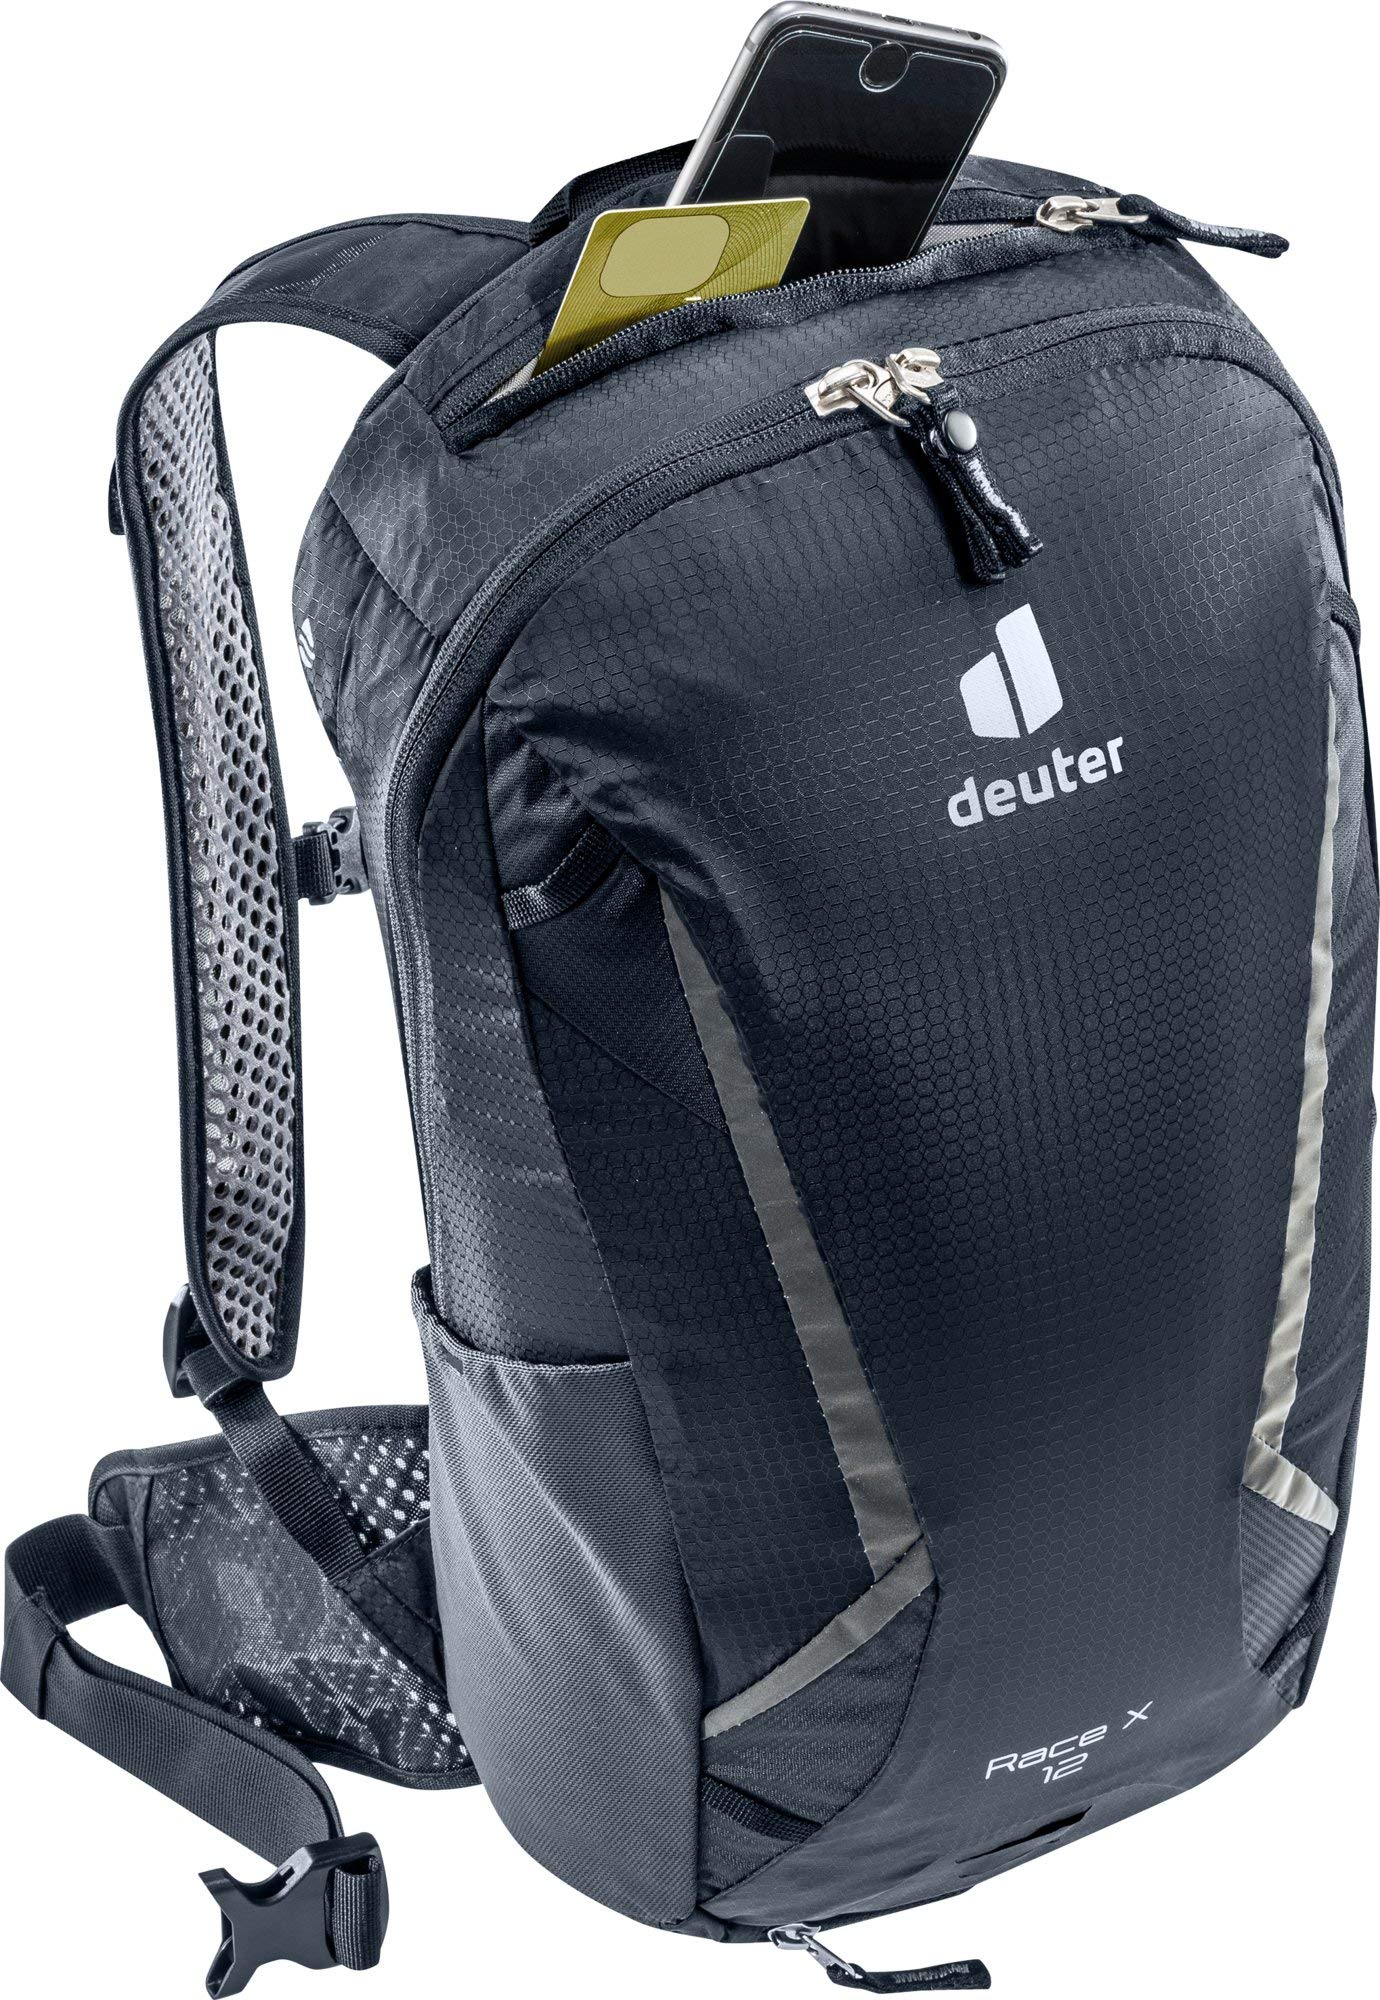 deuter Unisex – Adult's Race X Bicycle Backpack, Black, 12 l